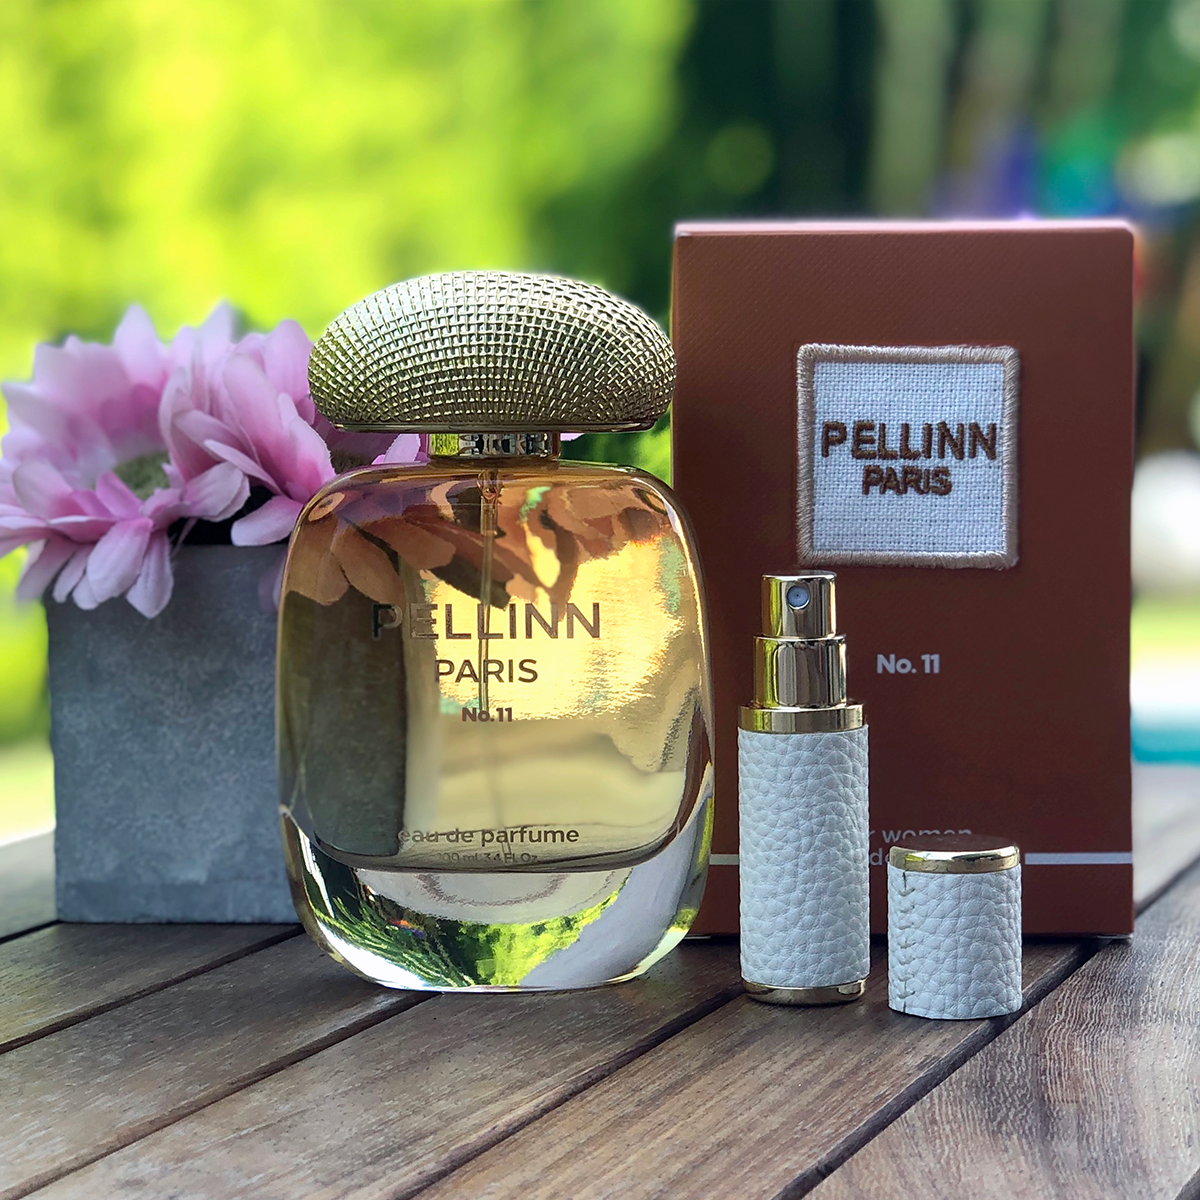 Pellinn Paris No.11 Çiçeksi ve Baharatlı Kadın EDP Parfüm 100 ml  Pellinn Paris Parfüm